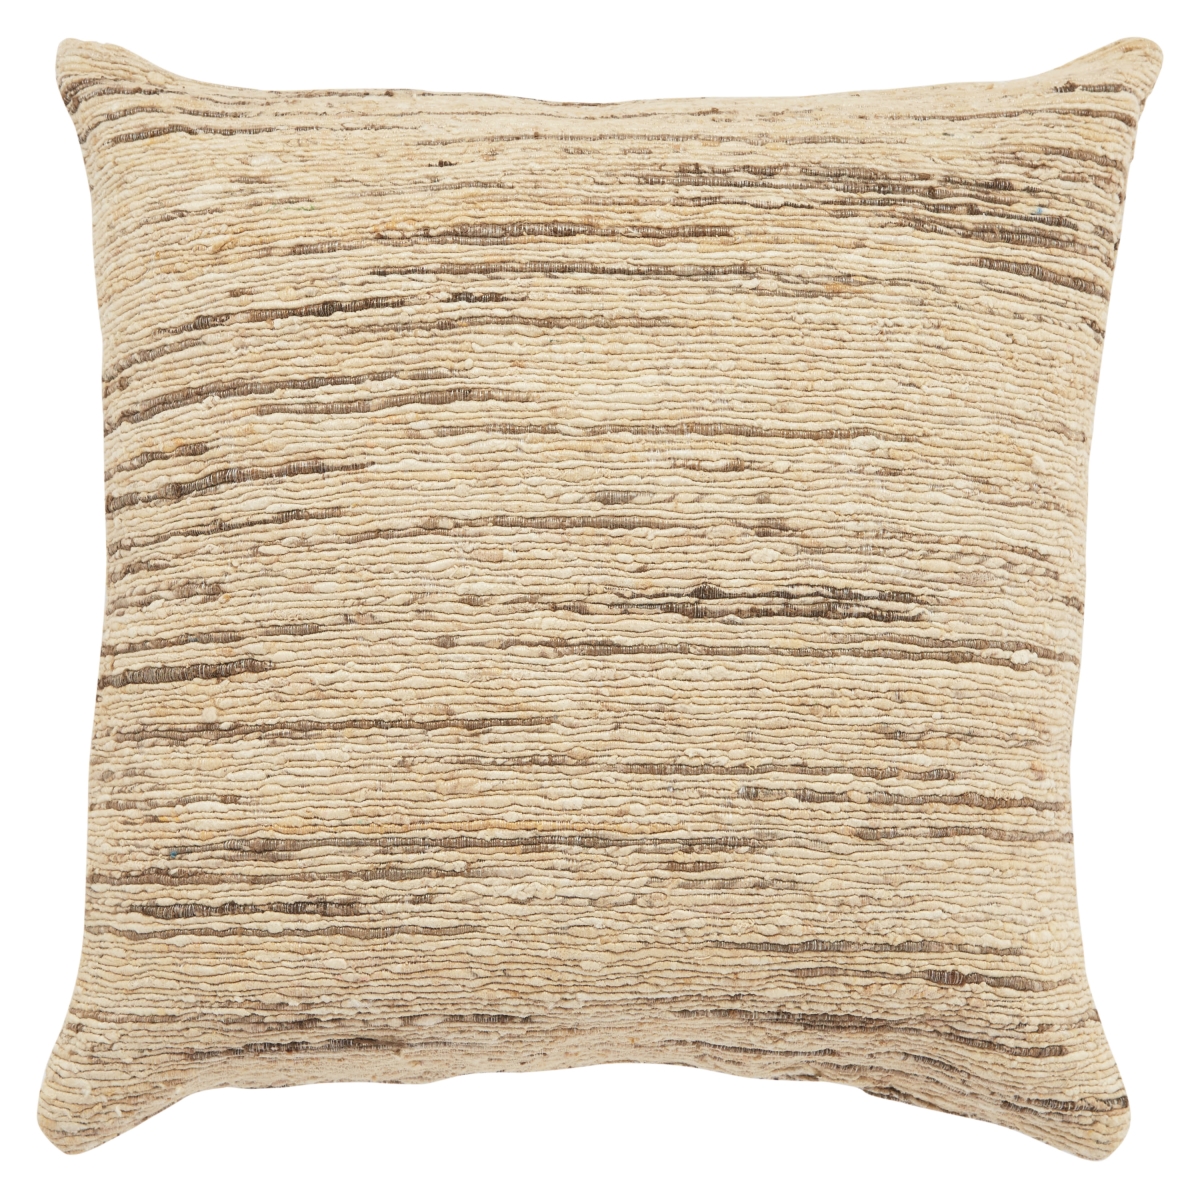 Plw103136 22 X 22 In. Mandarina Sheesha Beige & Gray Textured Poly Throw Pillow